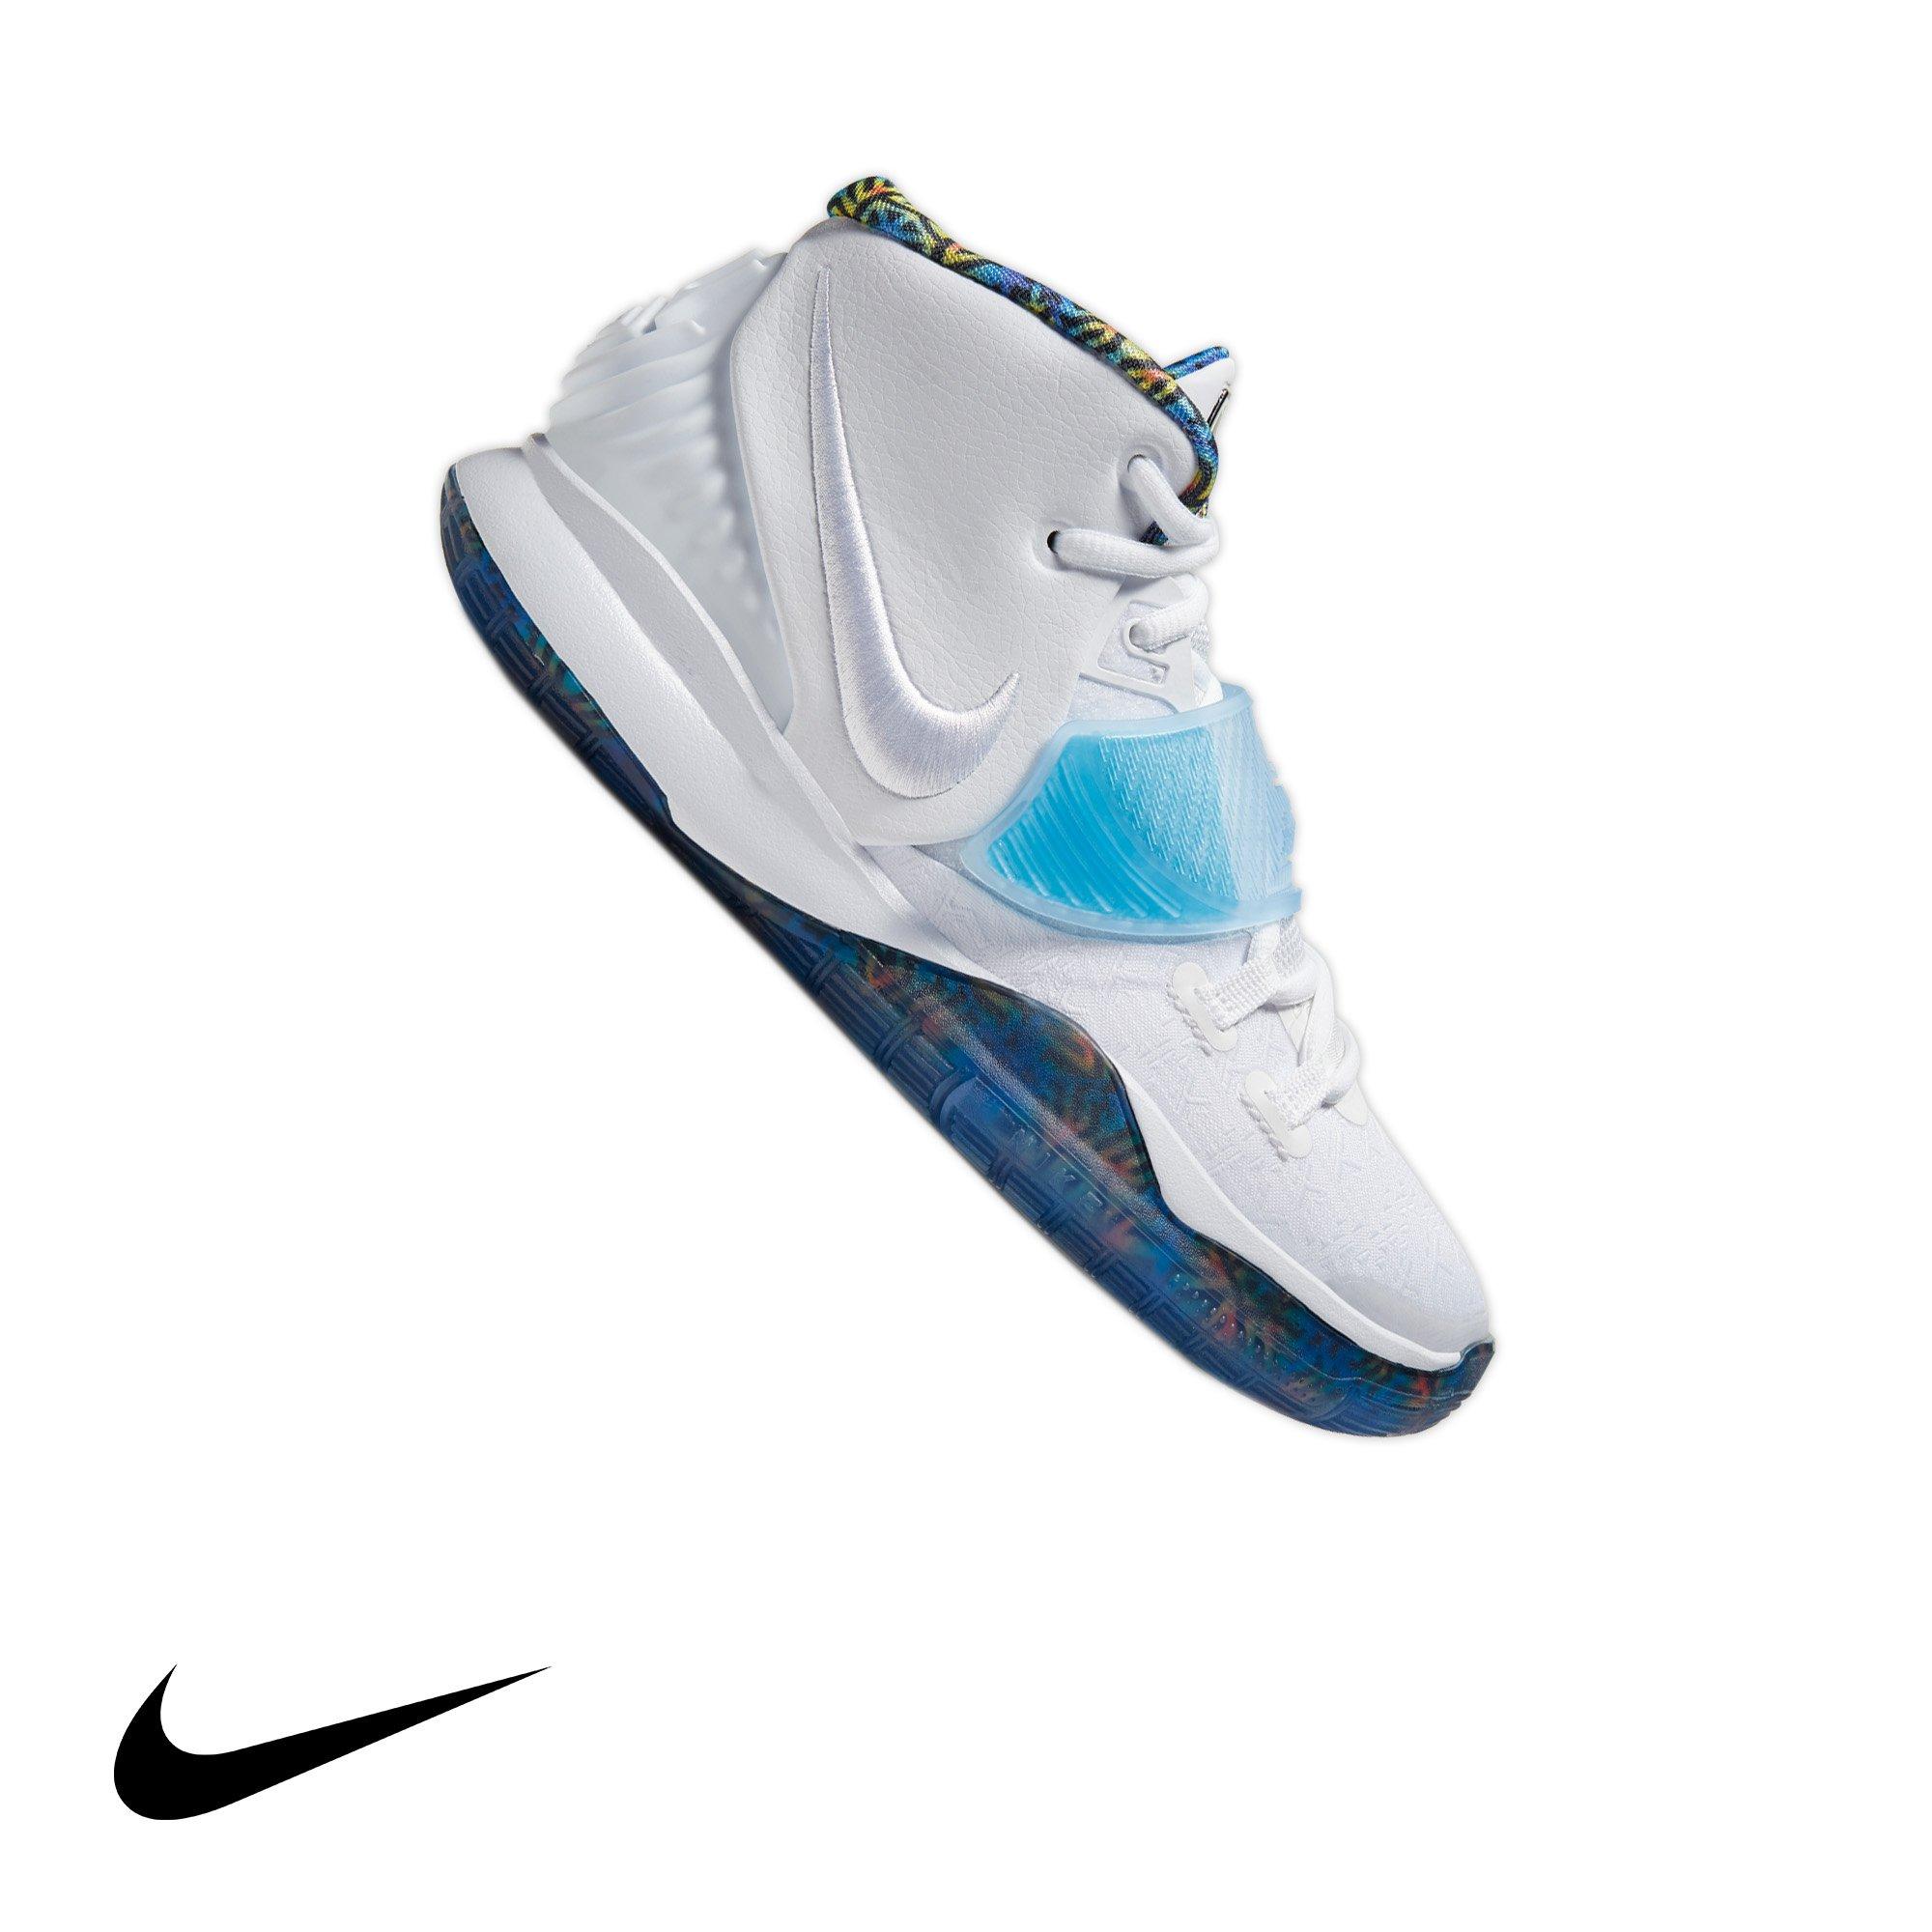 Nike Kyrie 6 PE 'Gray Black' Outdoors High Basketball Shoes